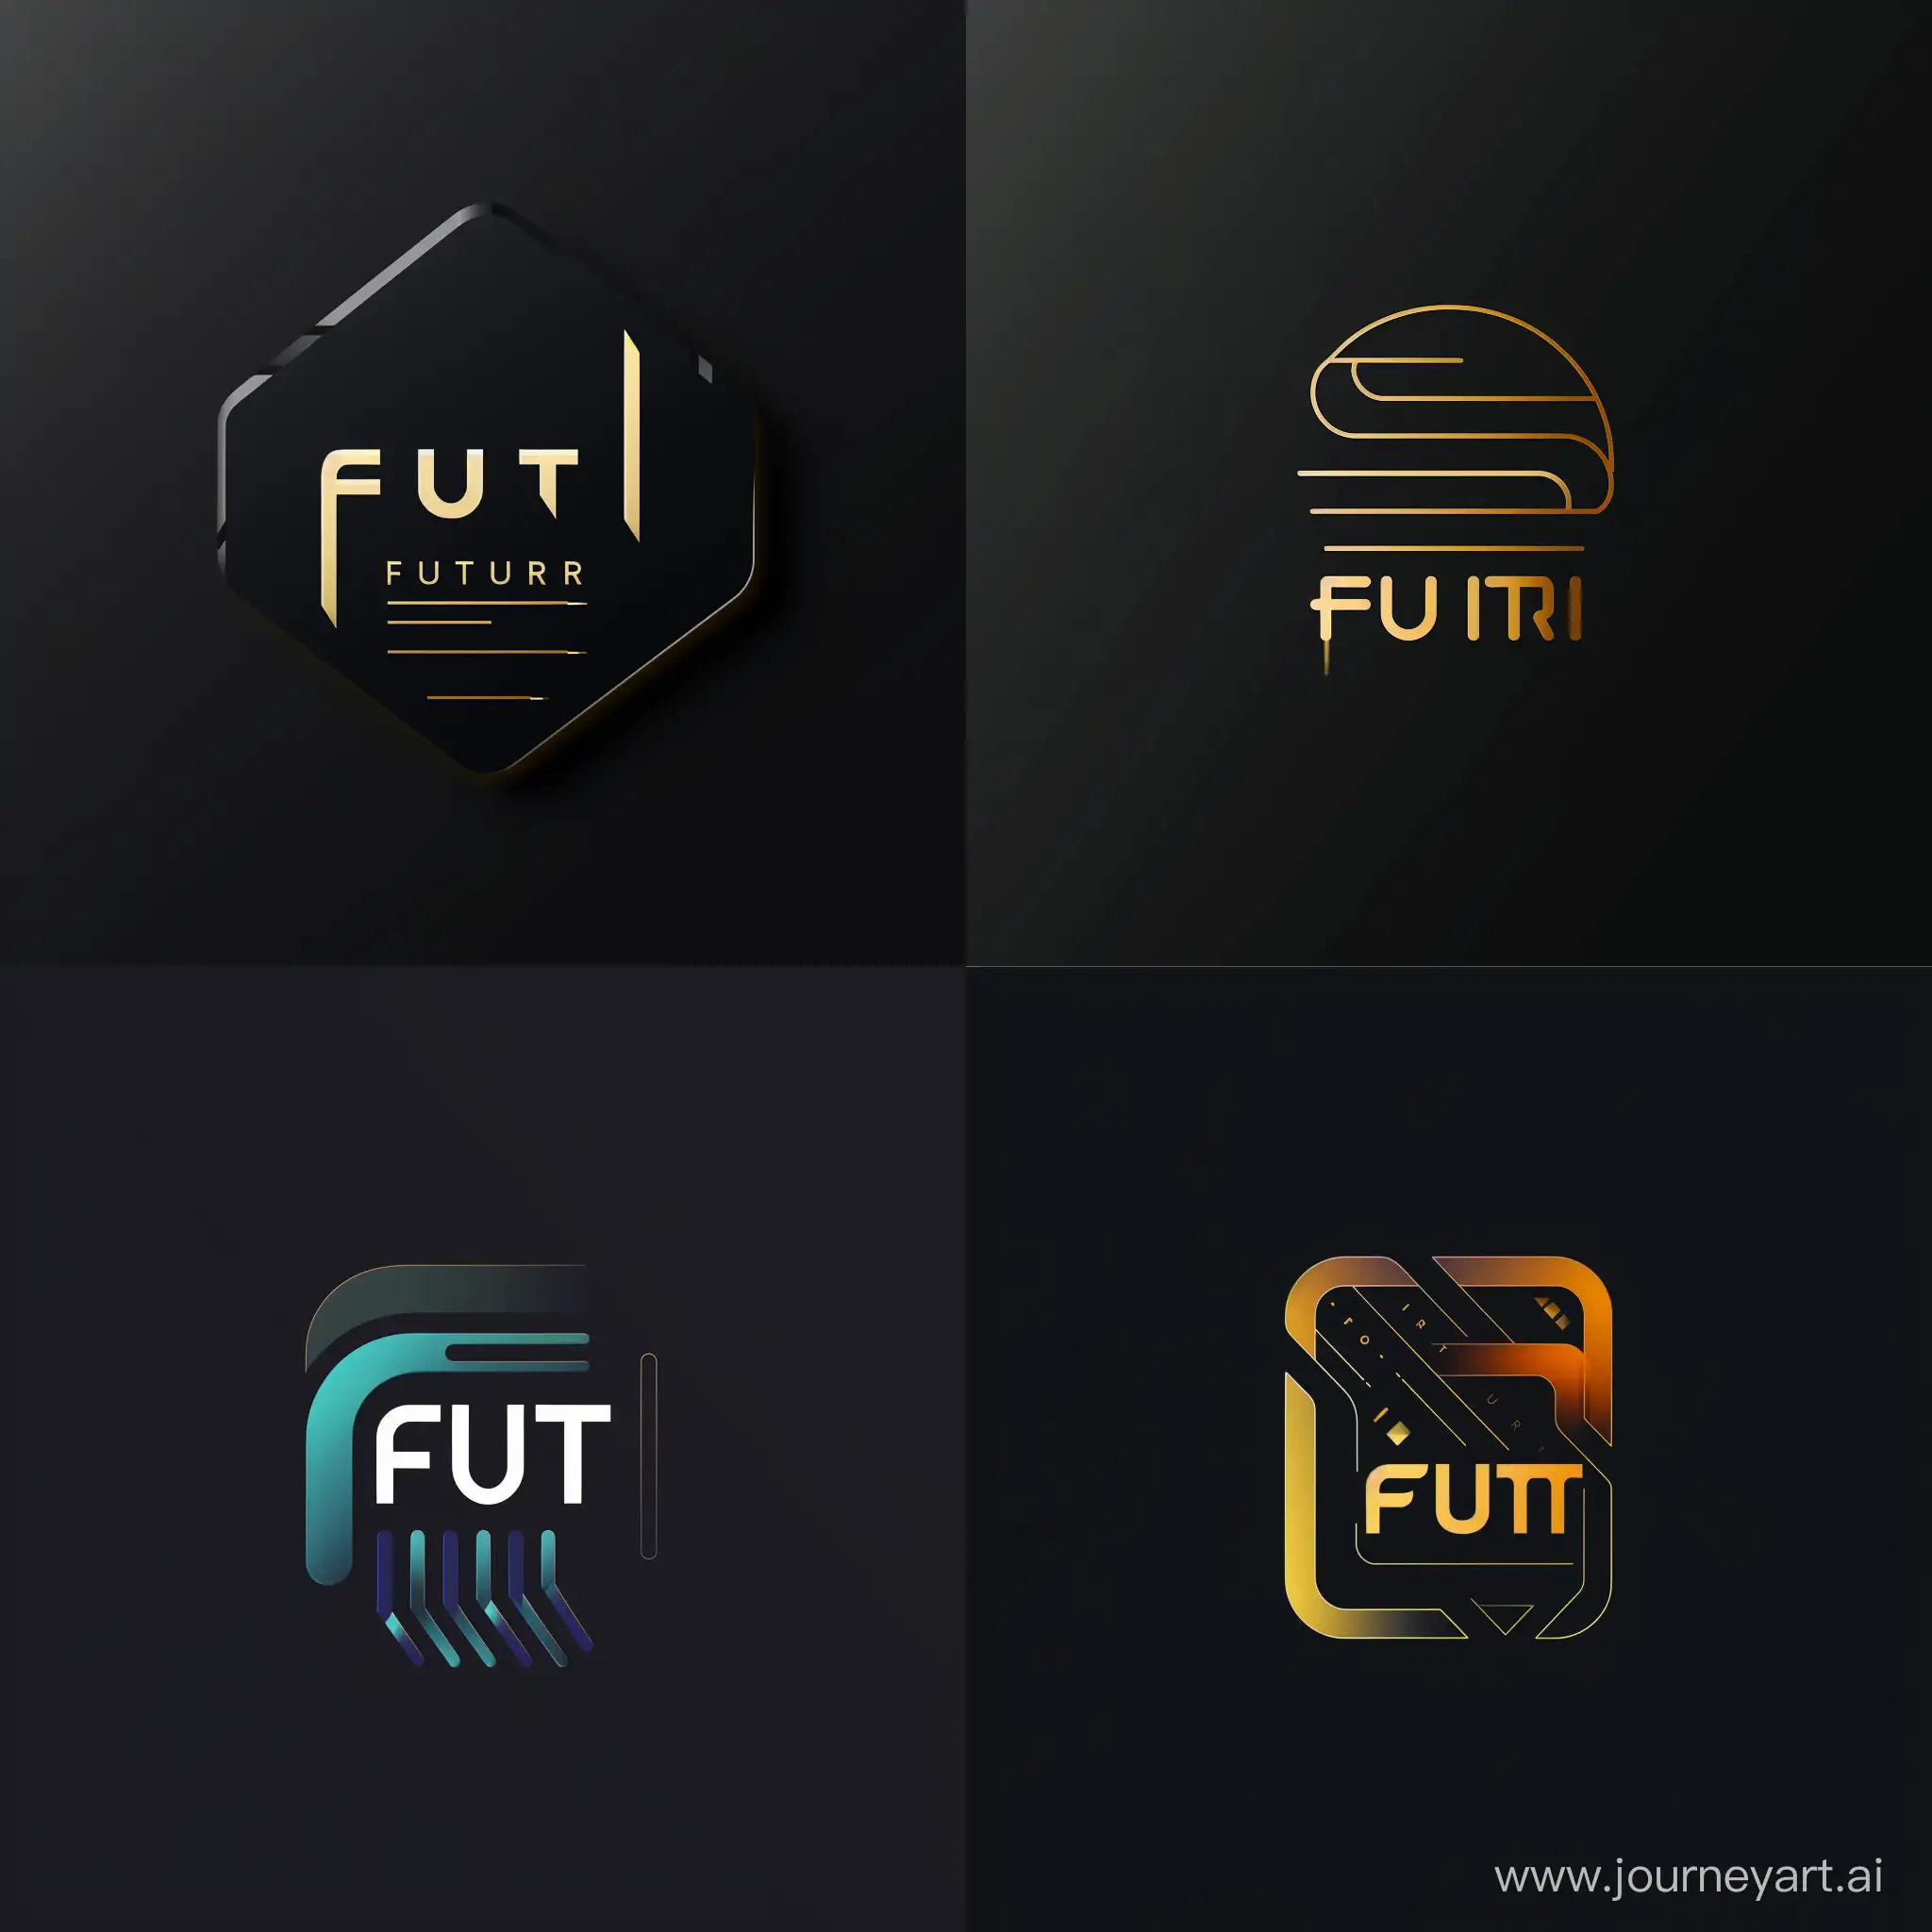 A modern, minimalist logo for a digital finance platform called Future